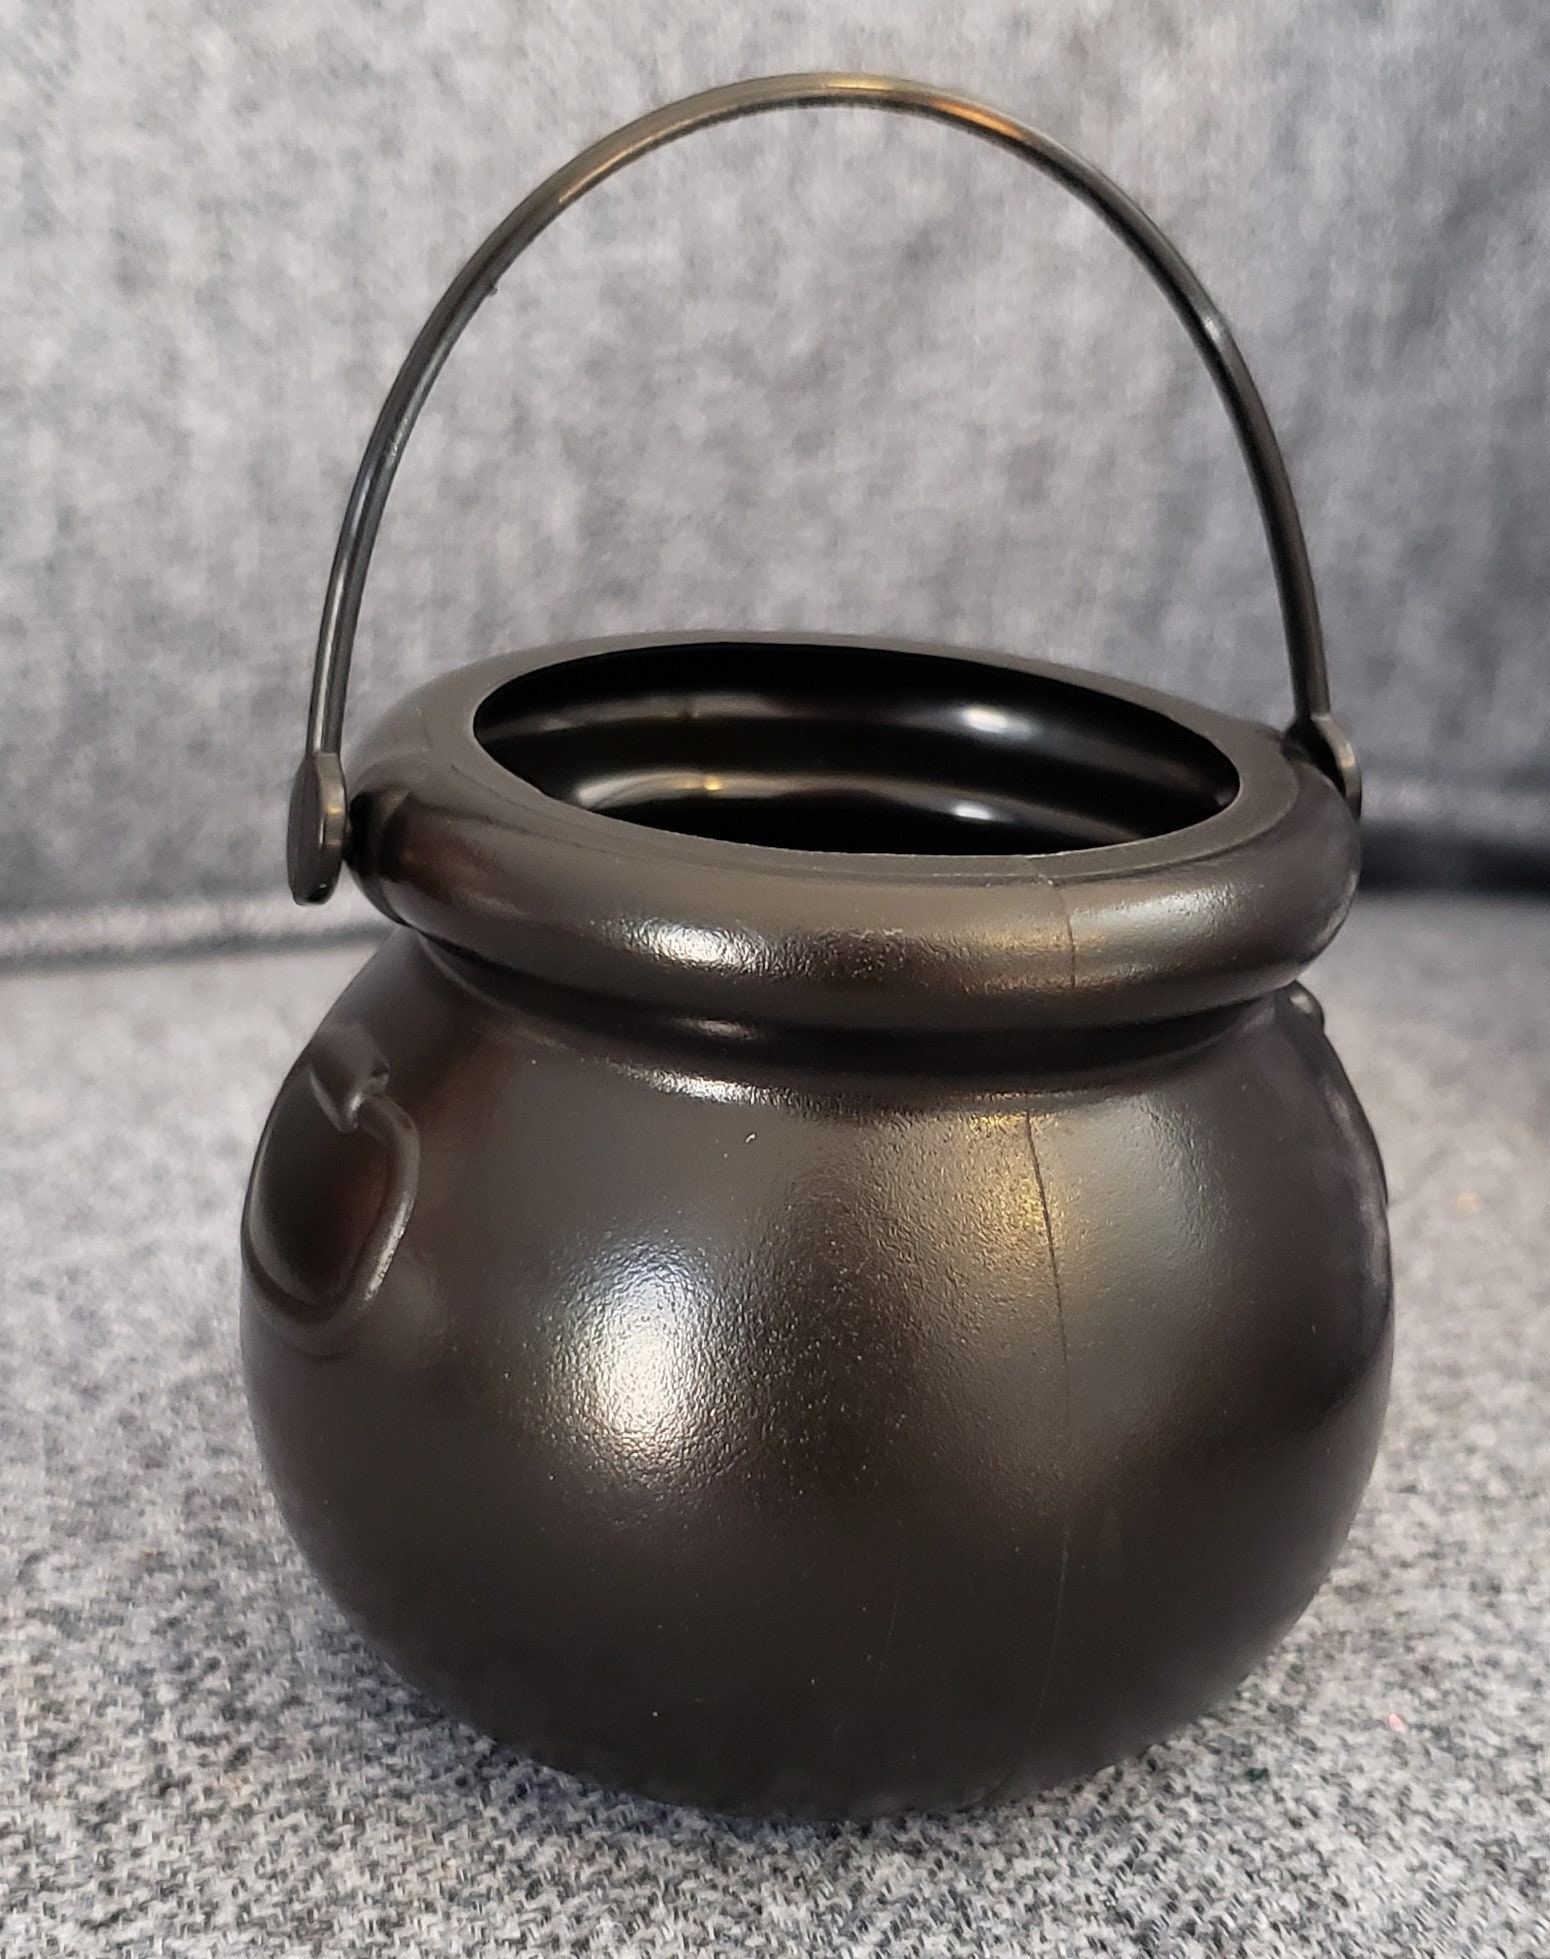 Plastic Cauldron for sale | Only 2 left at -75%